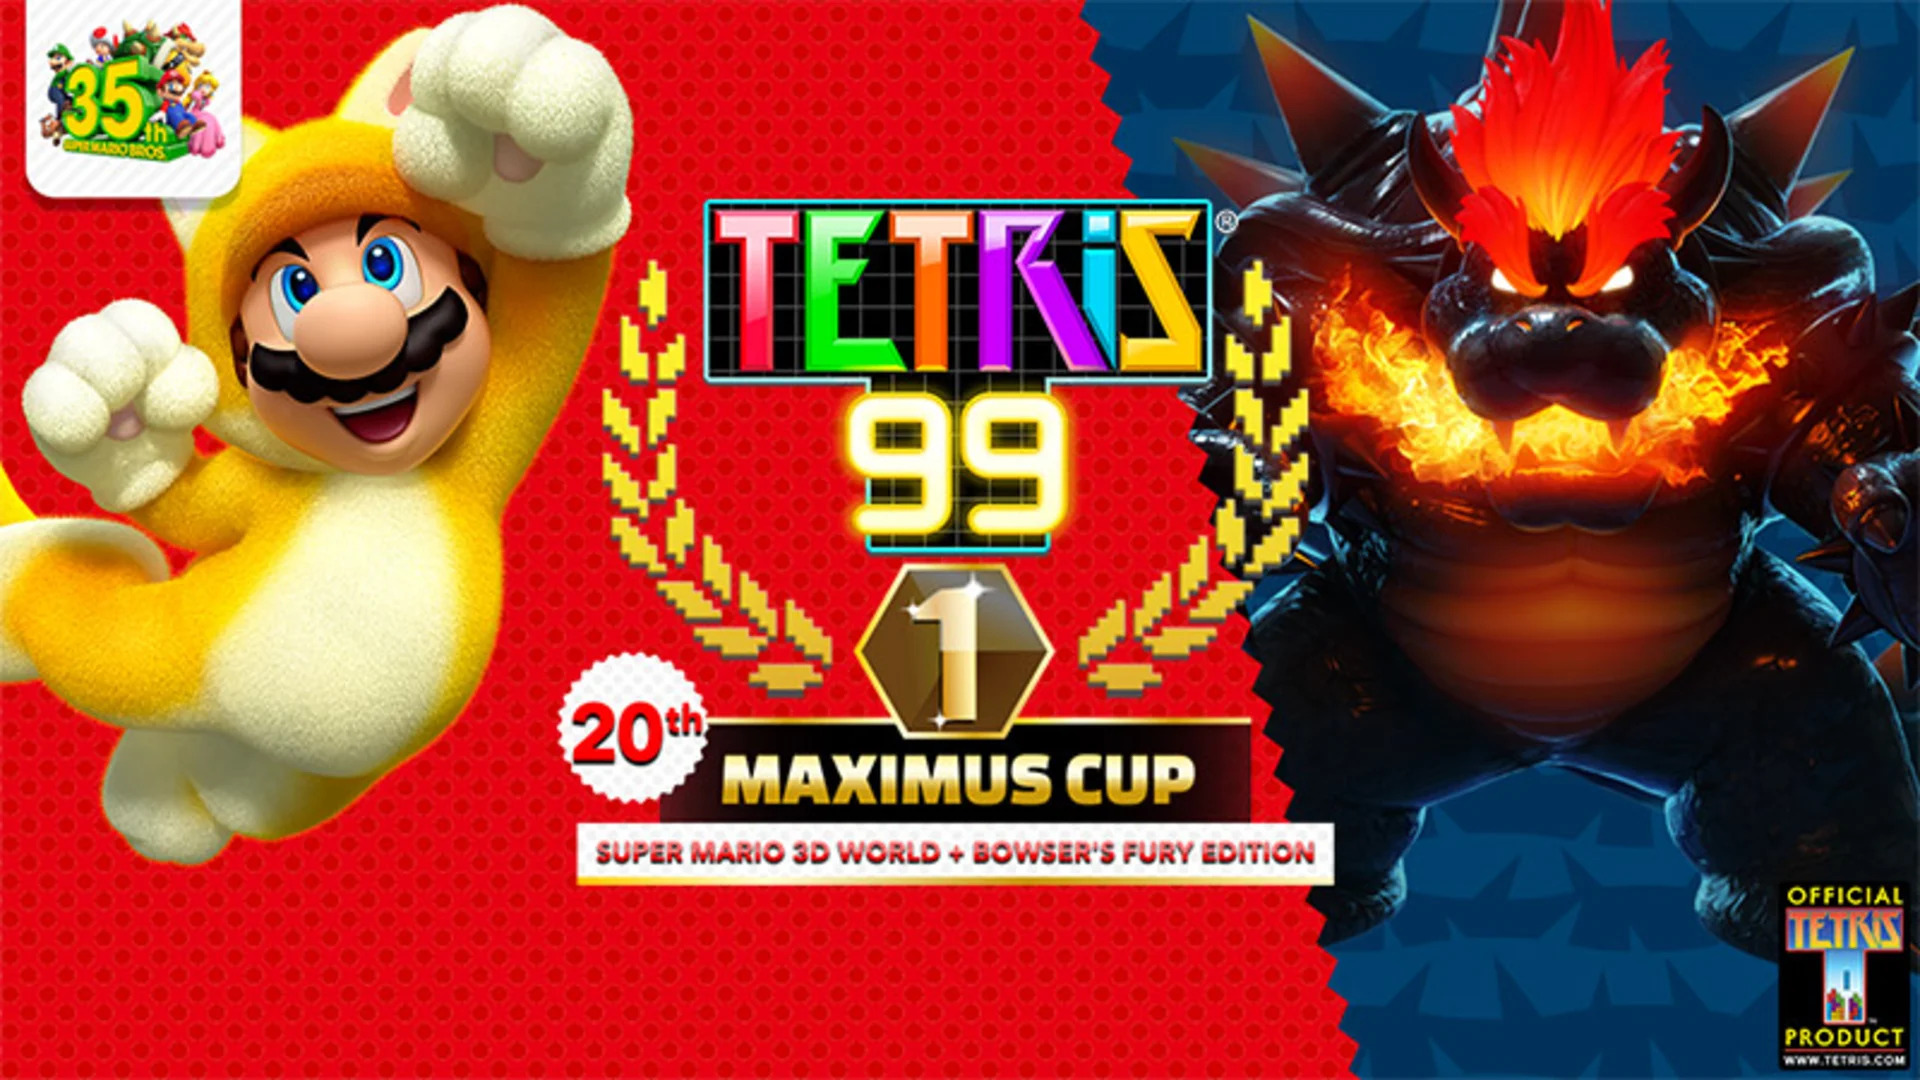 Cover for 20th Tetris 99 Maximus Cup